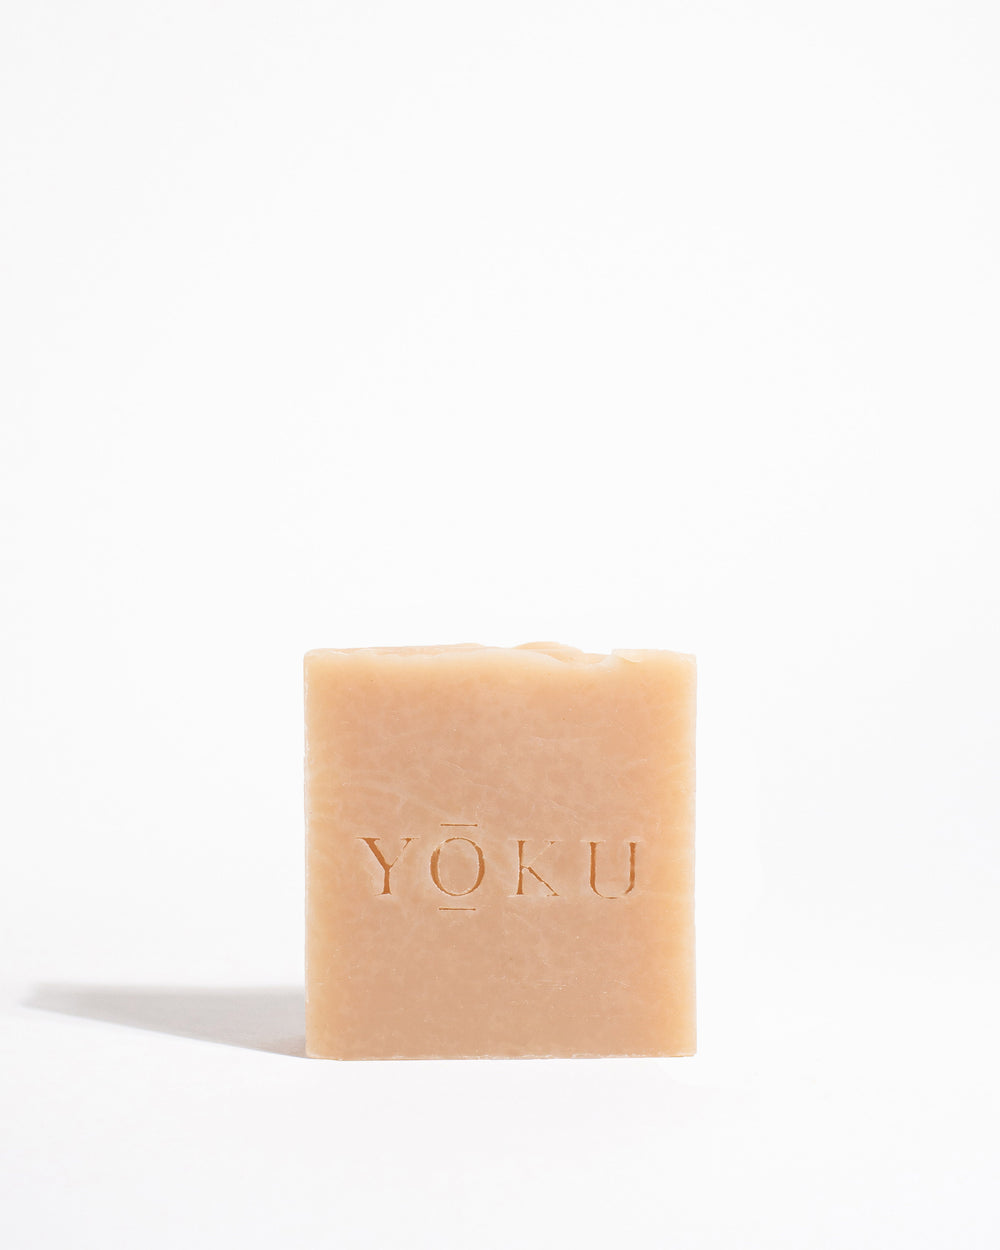 YOKU Natural Soap Bar - Lavender & Patchouli